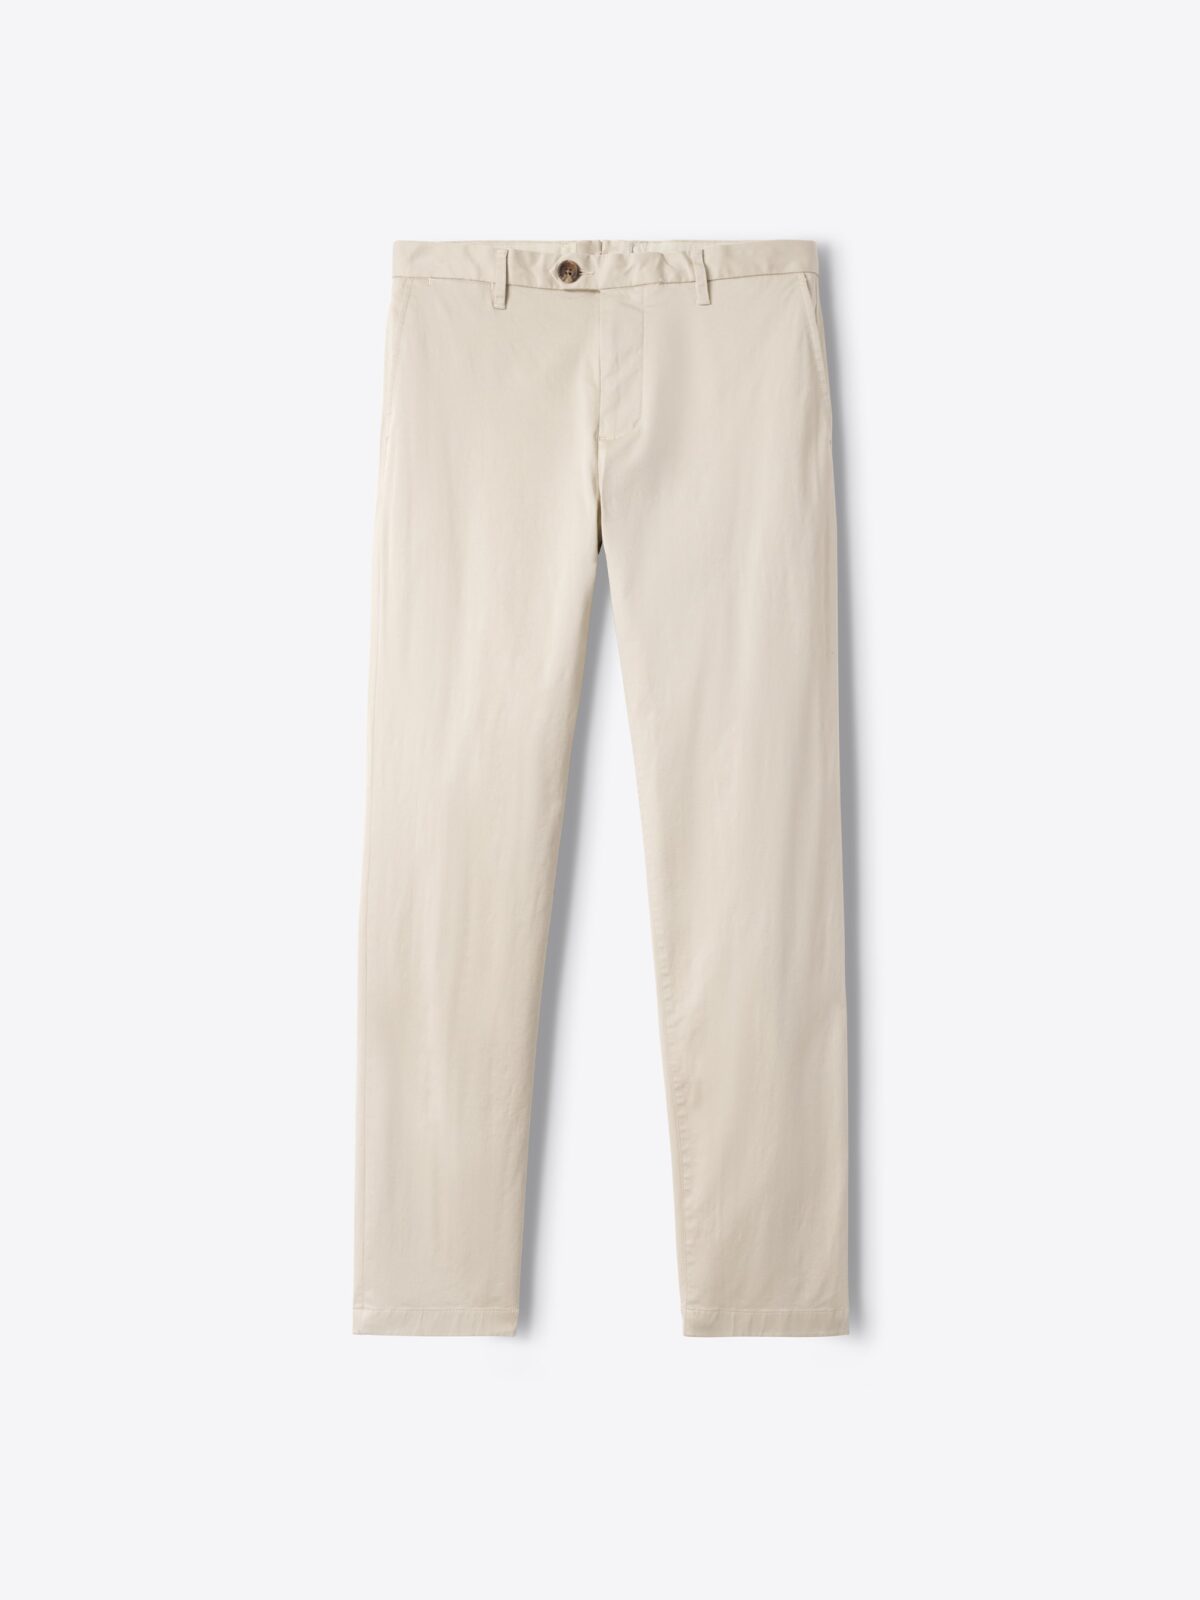 Di Sondrio Beige Stretch Cotton Chino - Custom Fit Pants